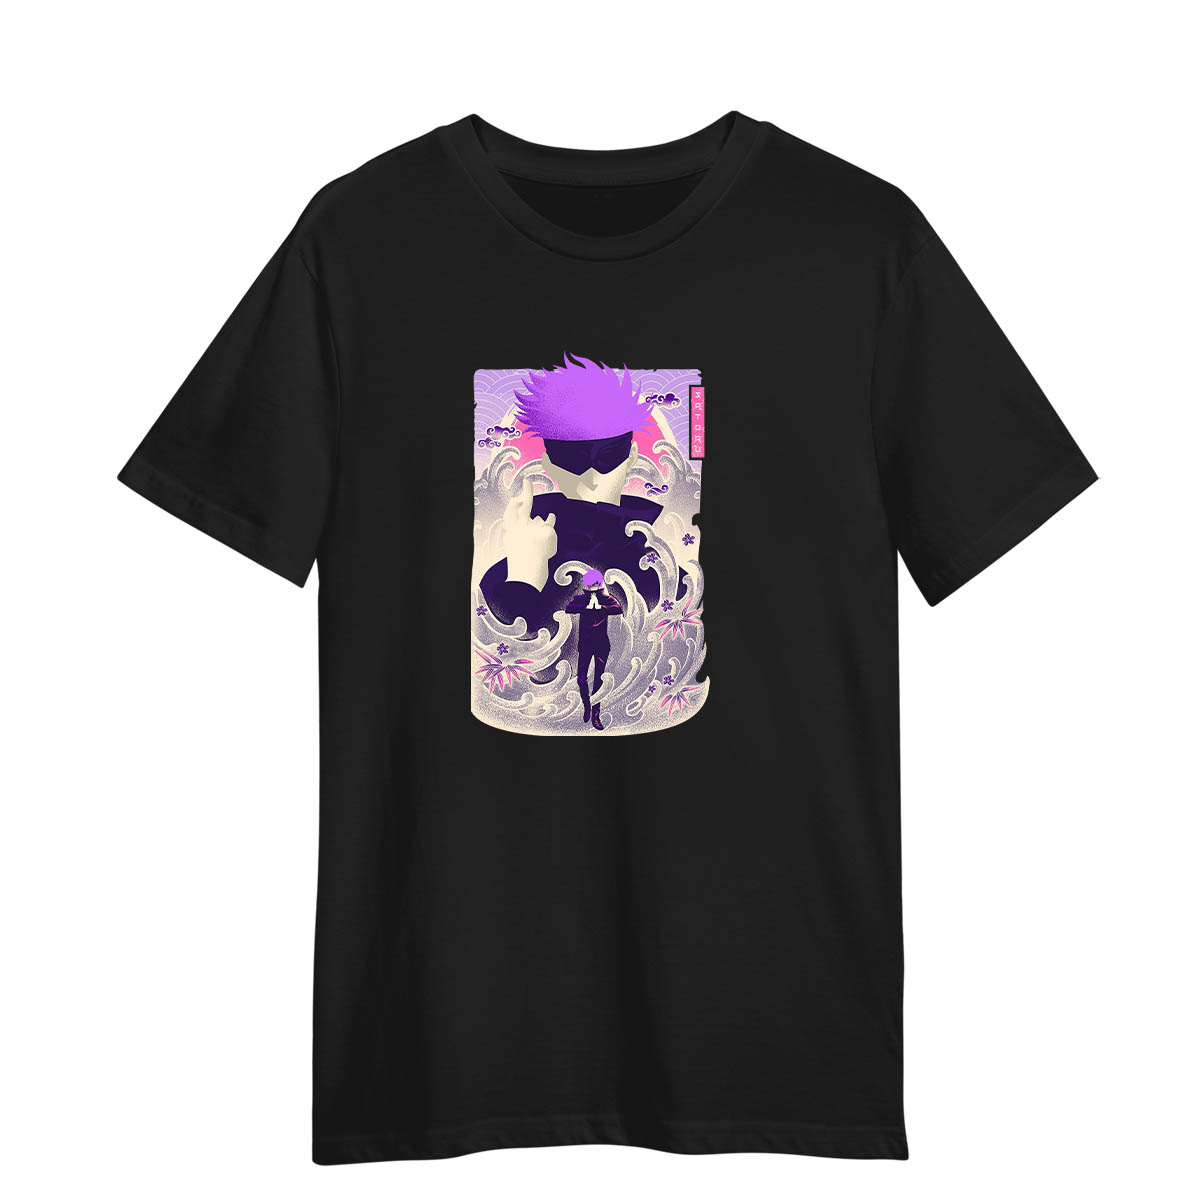 Musha Satoru Jujutsu Kaisen Anime Gojo Satoru Graphic Art Adult Unisex Black T-shirtMusha Satoru Jujutsu Kaisen Anime Gojo Satoru Graphic Art Adult Unisex T-shirt